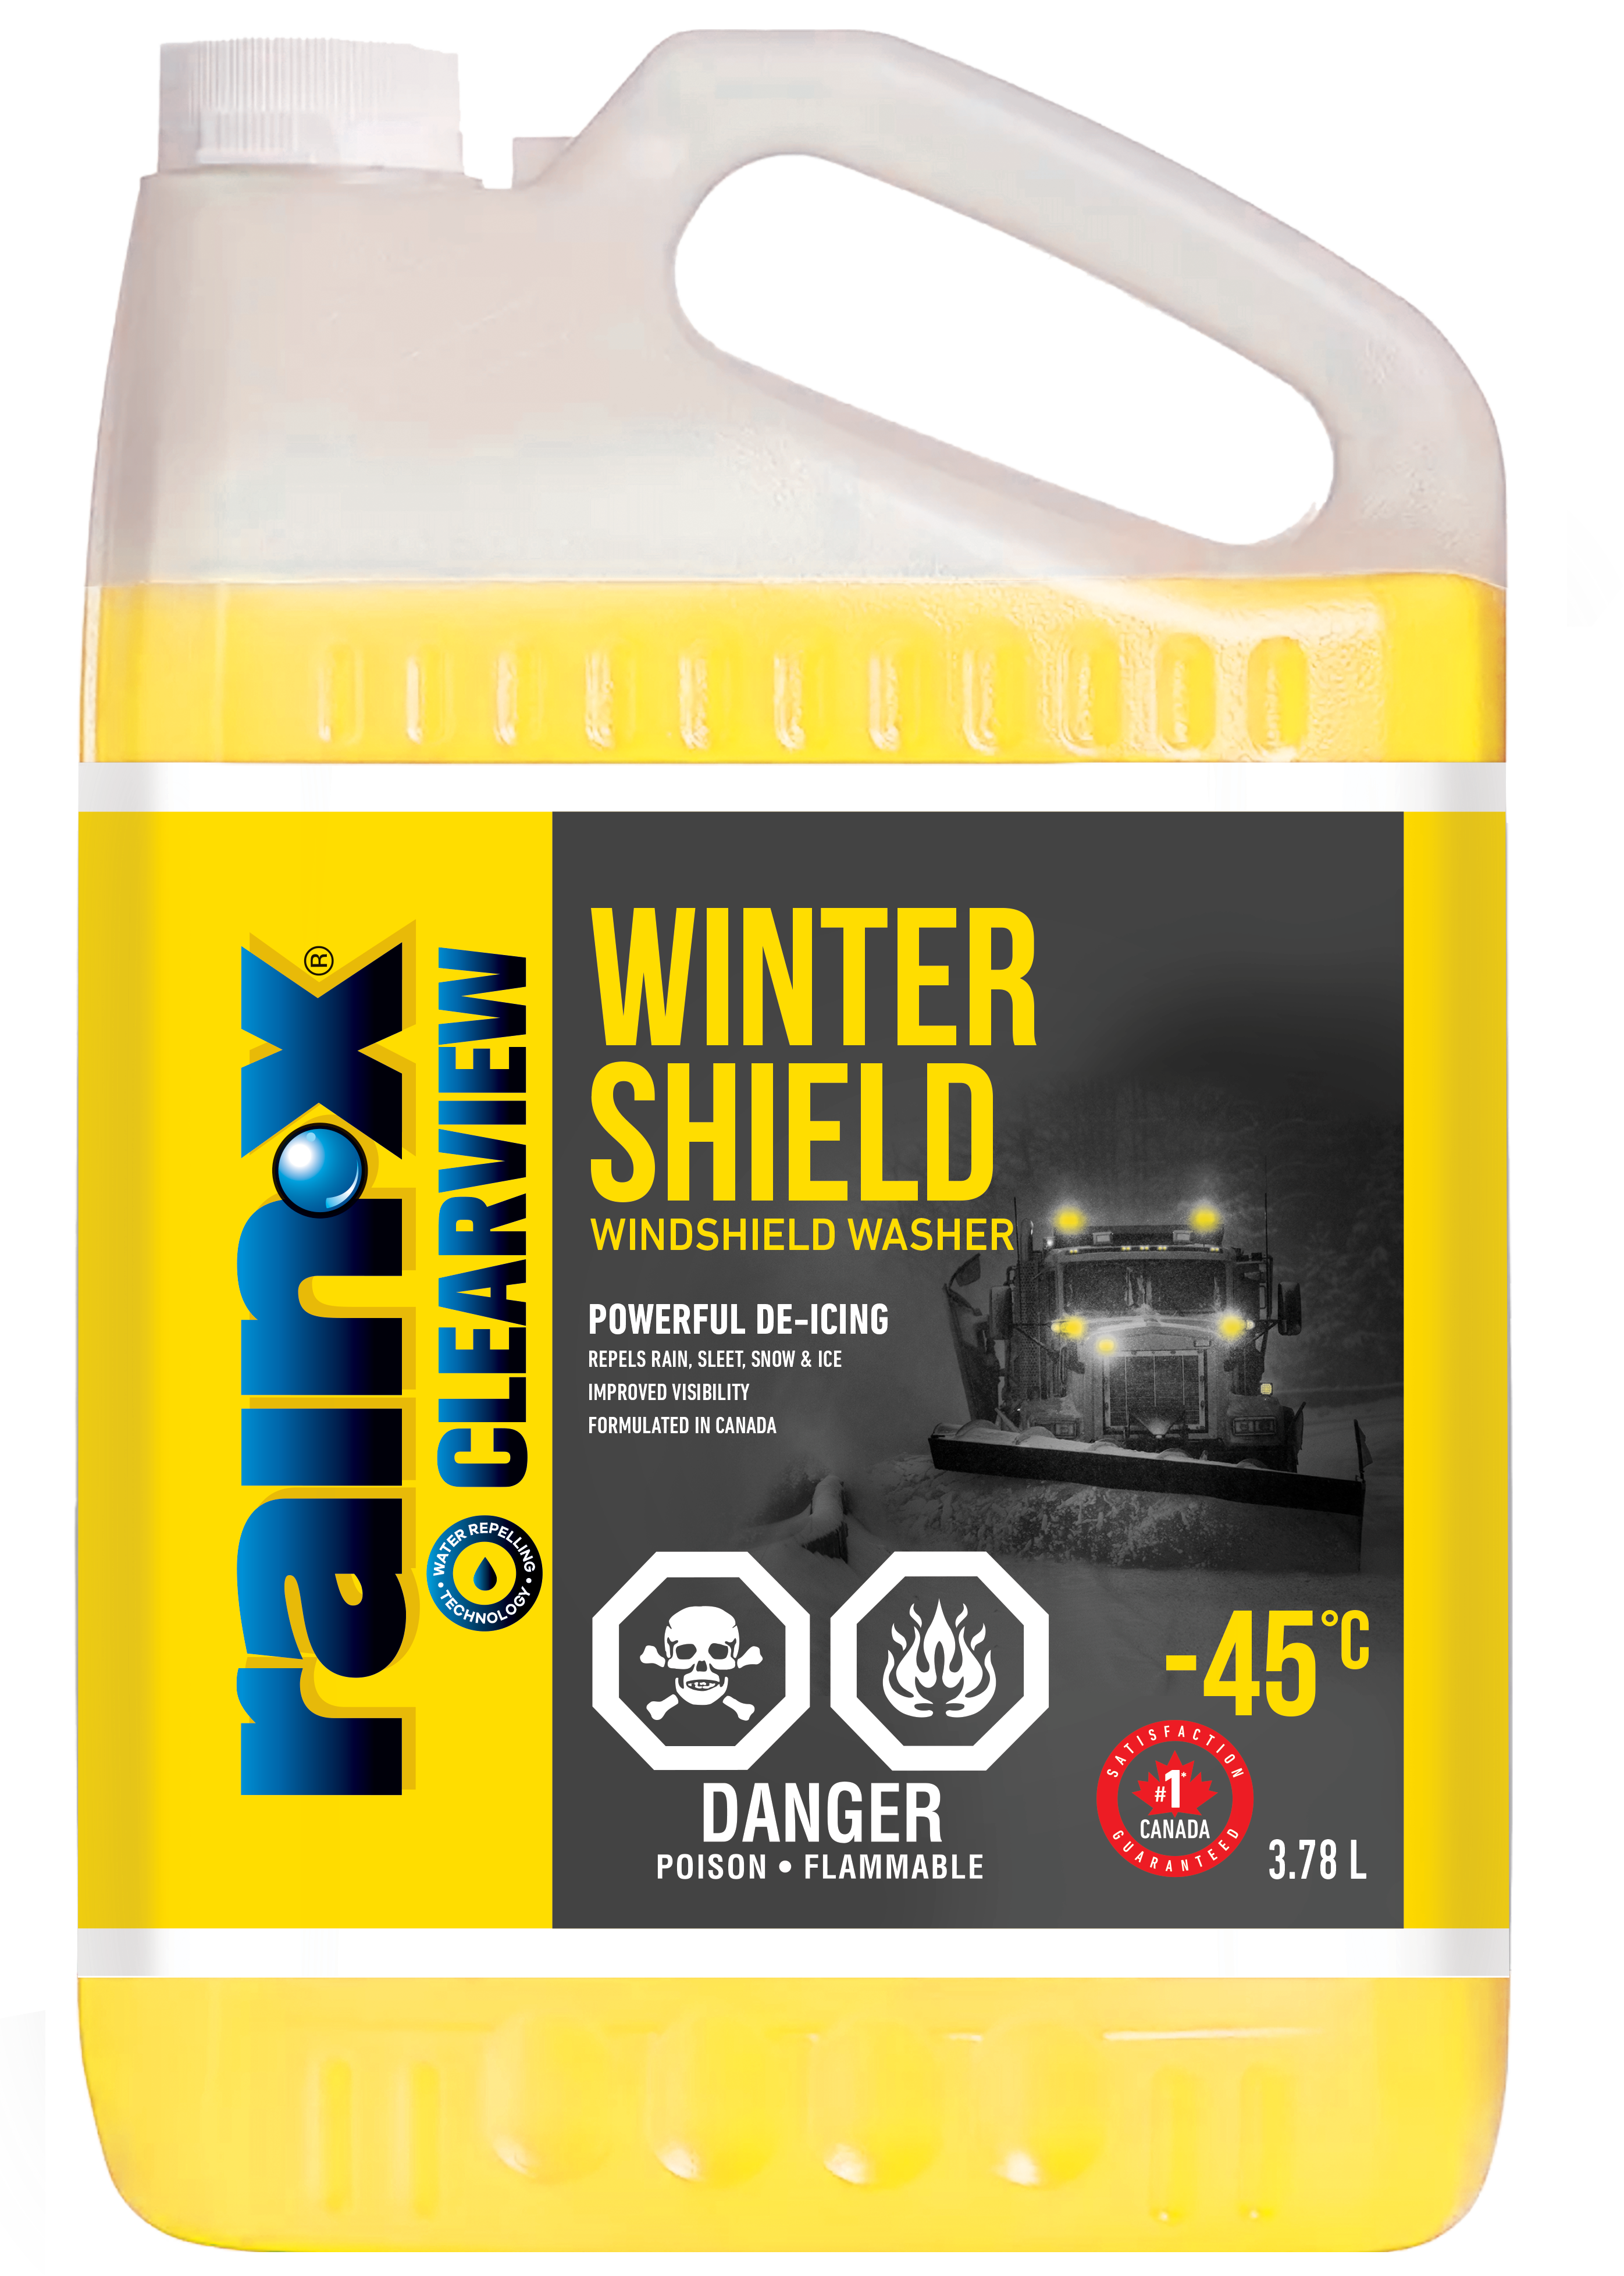 Winter Shield by Rain-X for -45˚C